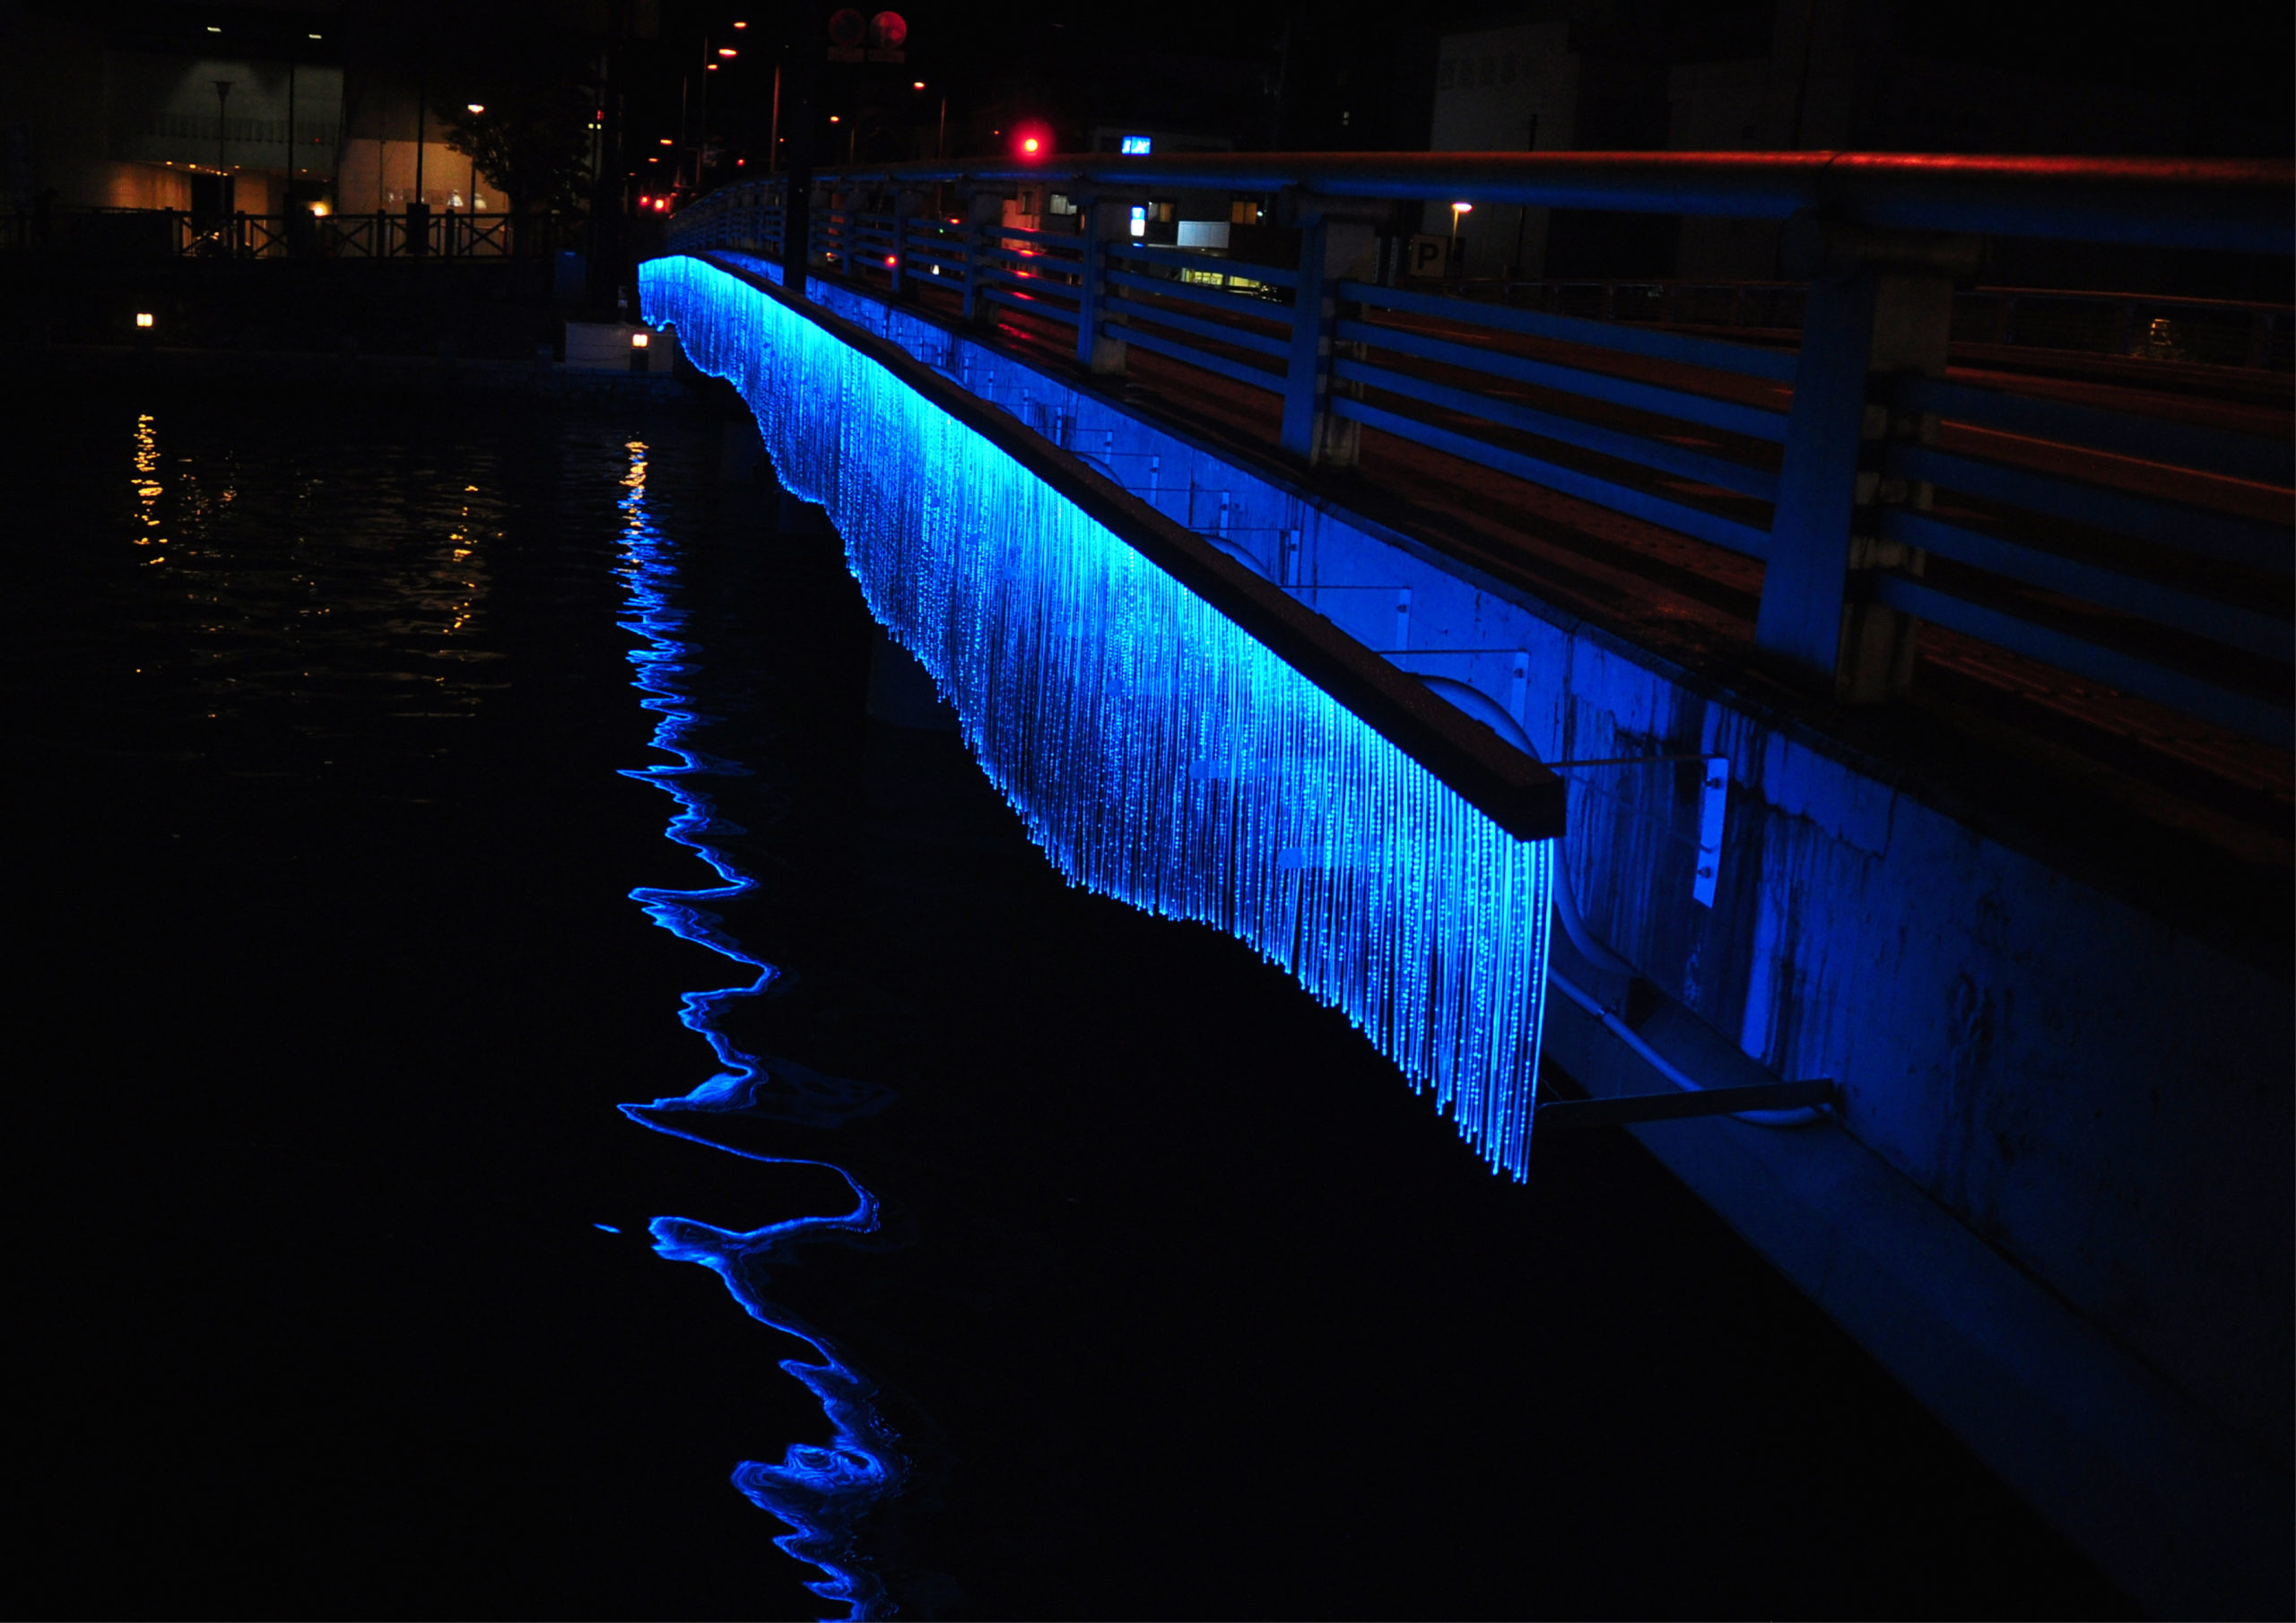 spatial practice architecture office Los Angeles Hong Kong indigo digital waterfall light installation tokushima japan night view light trace